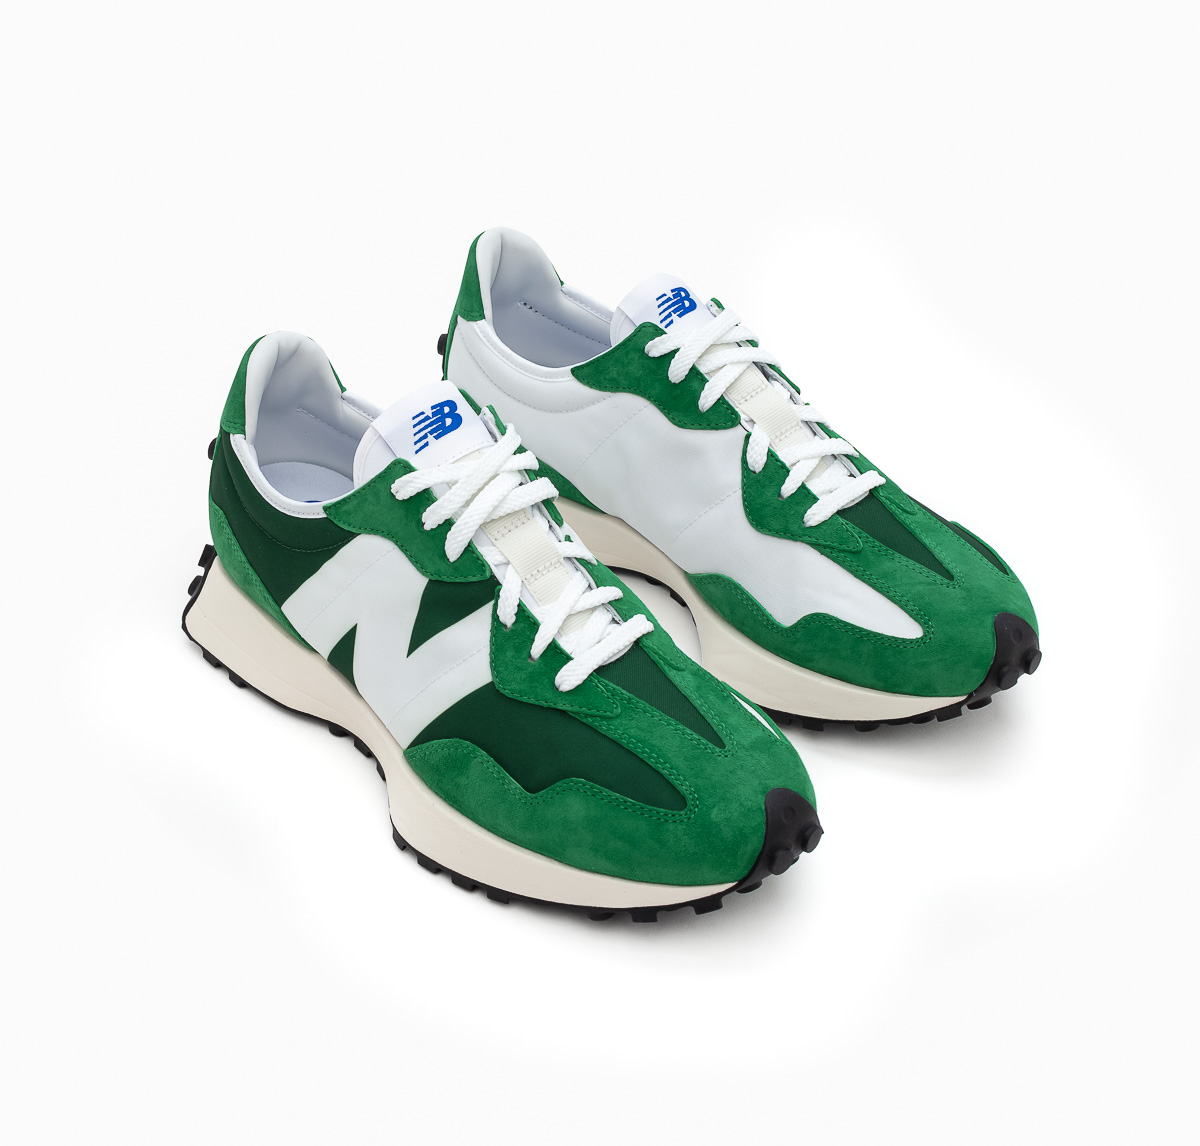 New Balance 327 - Varsity Green pair